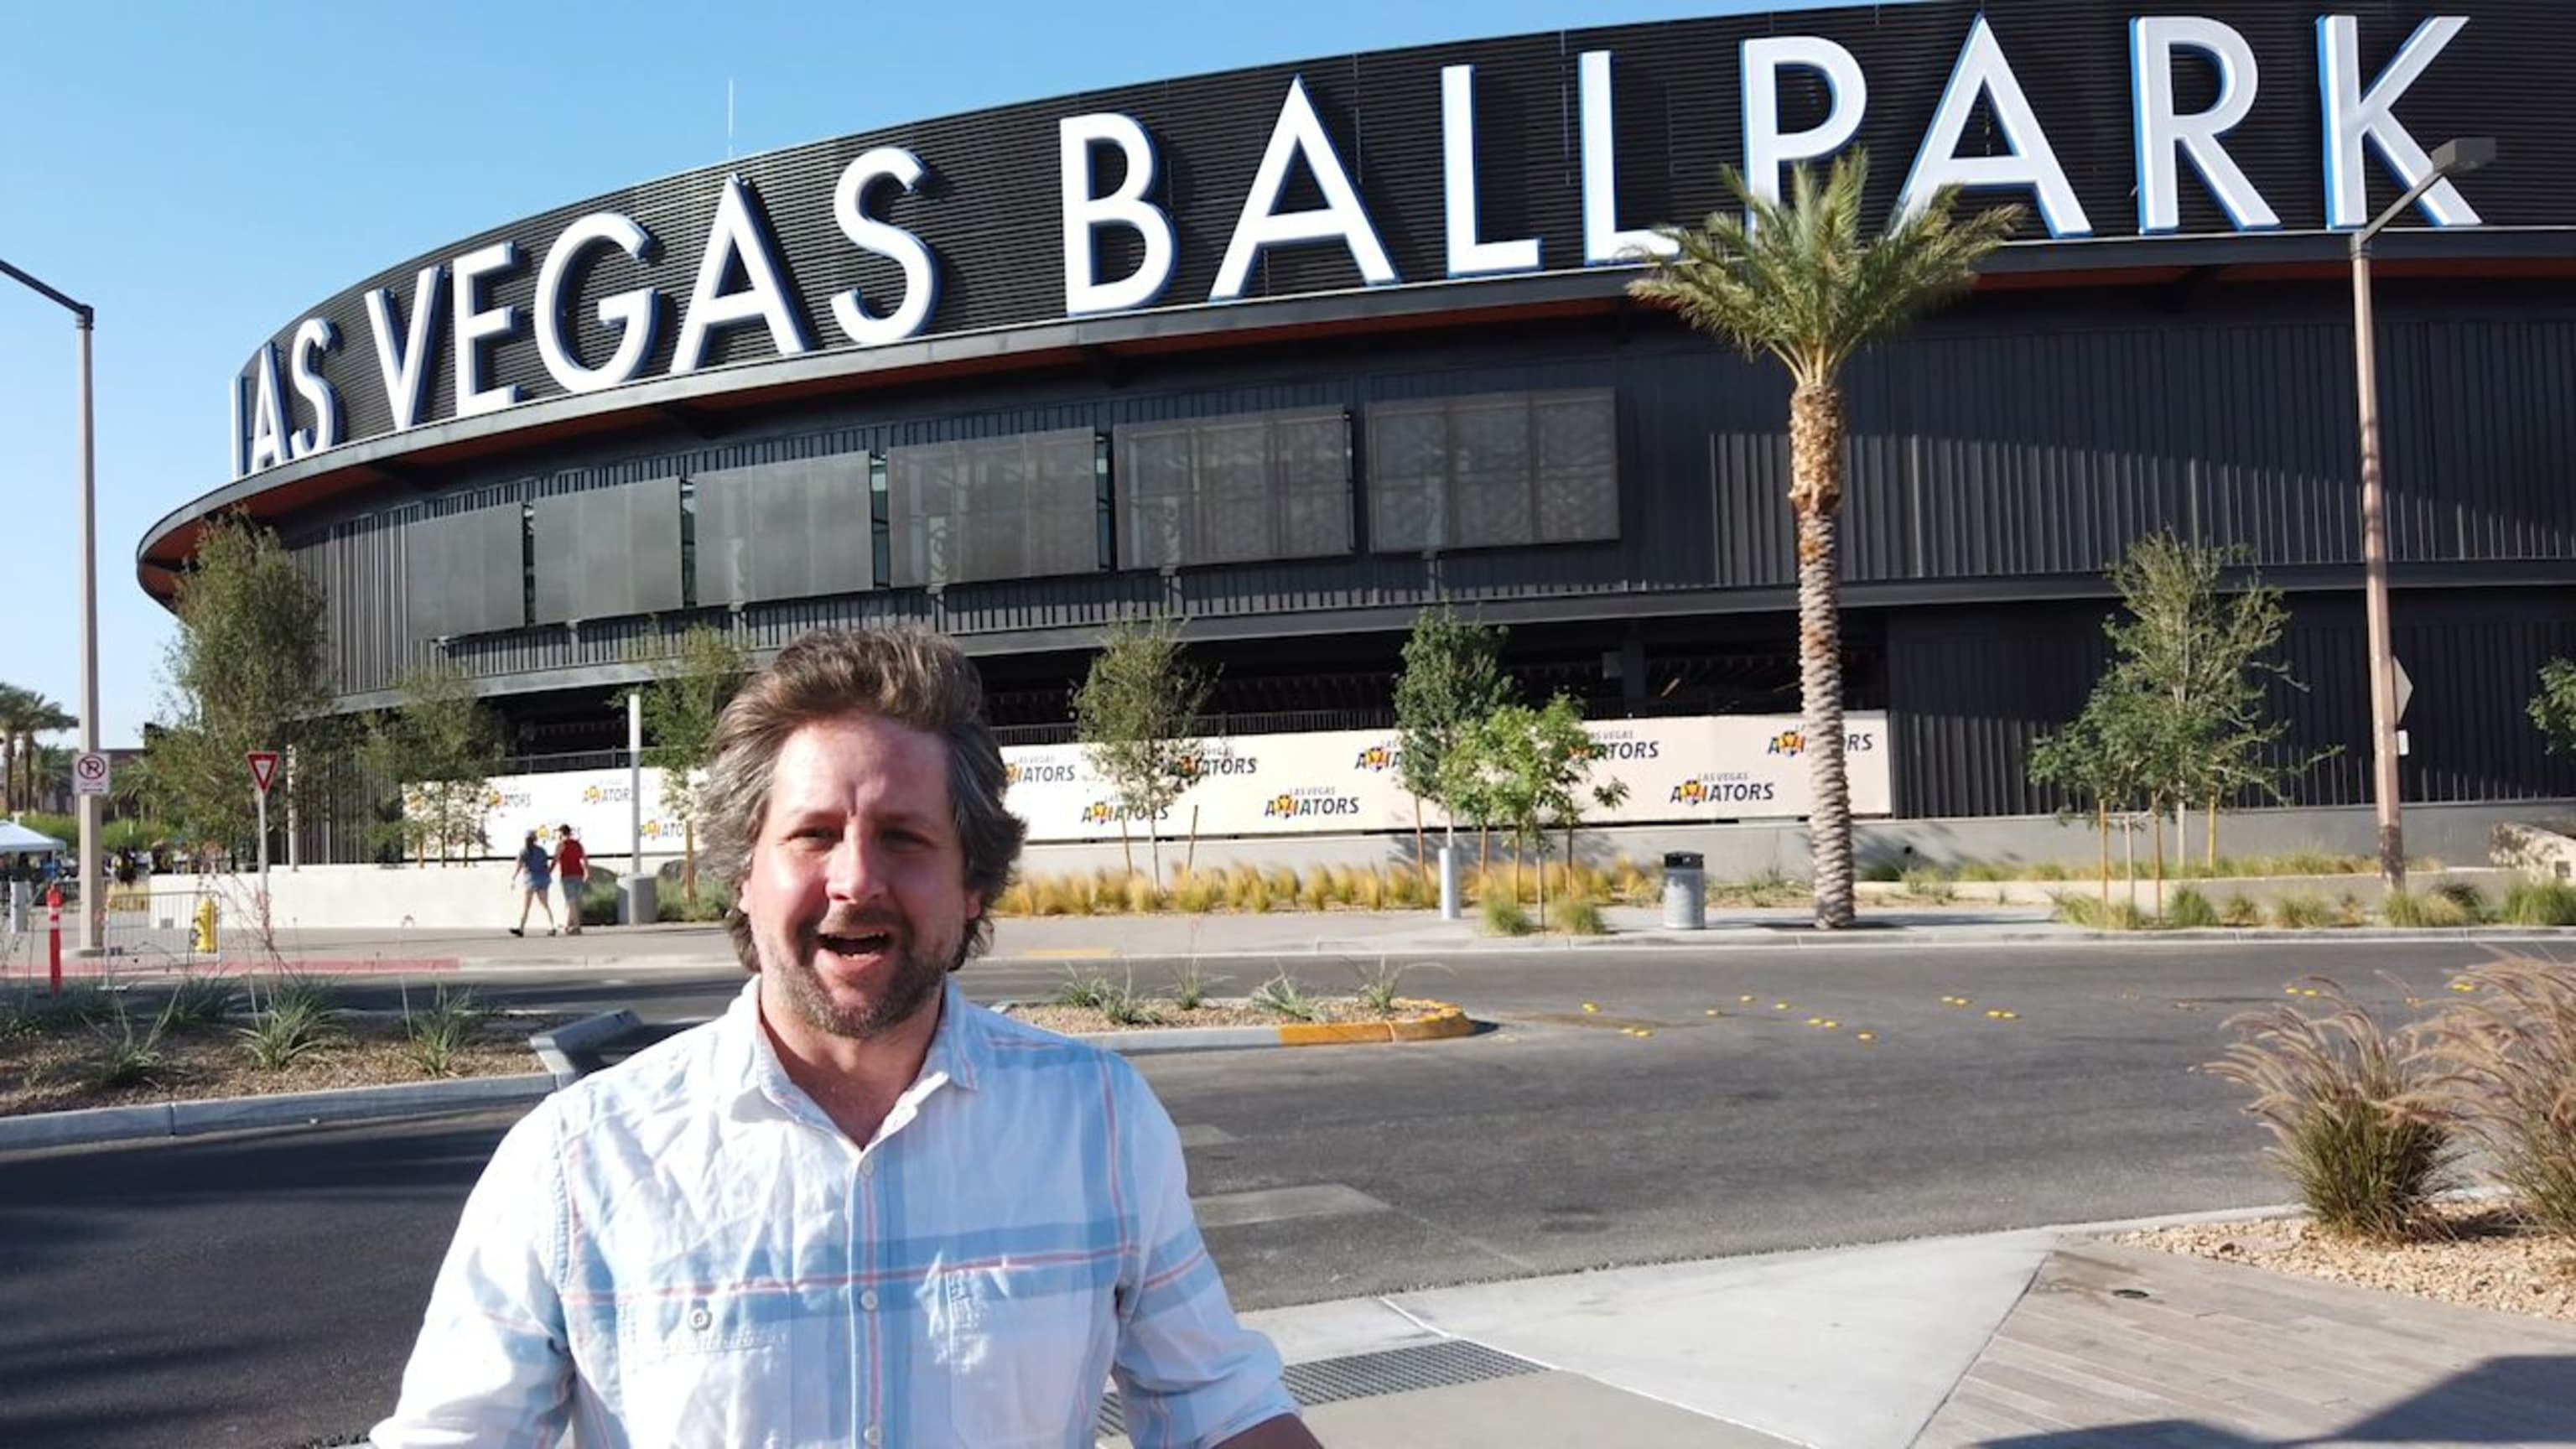 Big League Weekend returns to Las Vegas Ballpark in Spring 2023